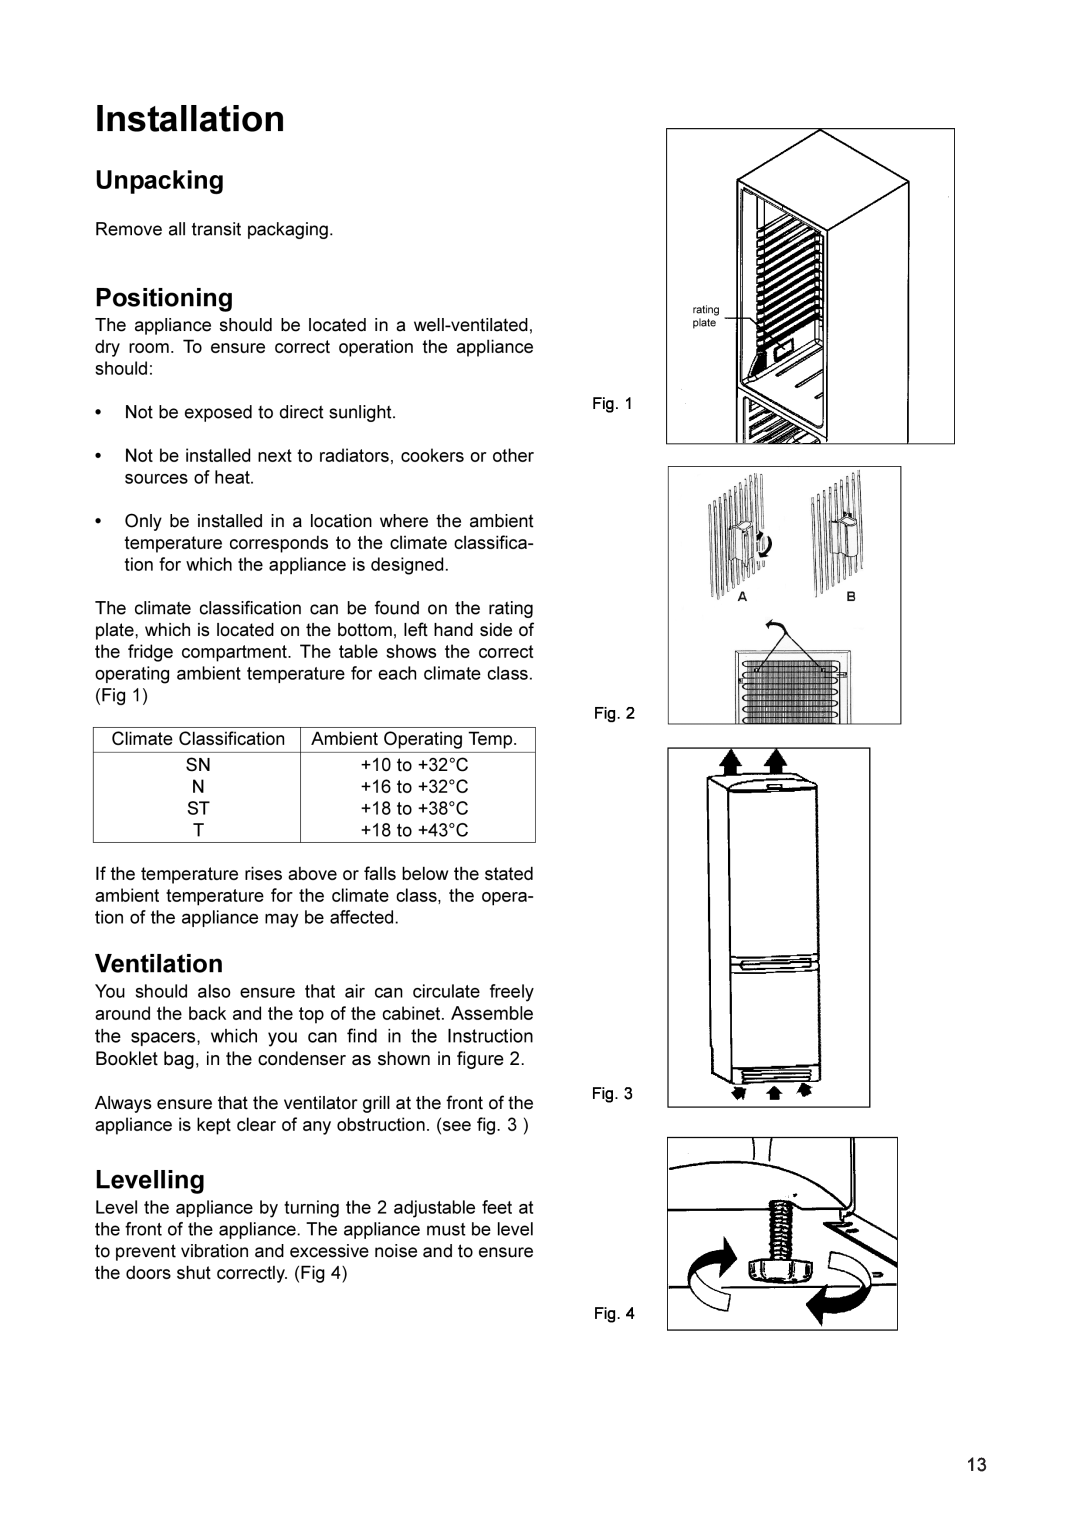 John Lewis JLFFW2001 manual Installation, Unpacking, Positioning, Ventilation, Levelling 